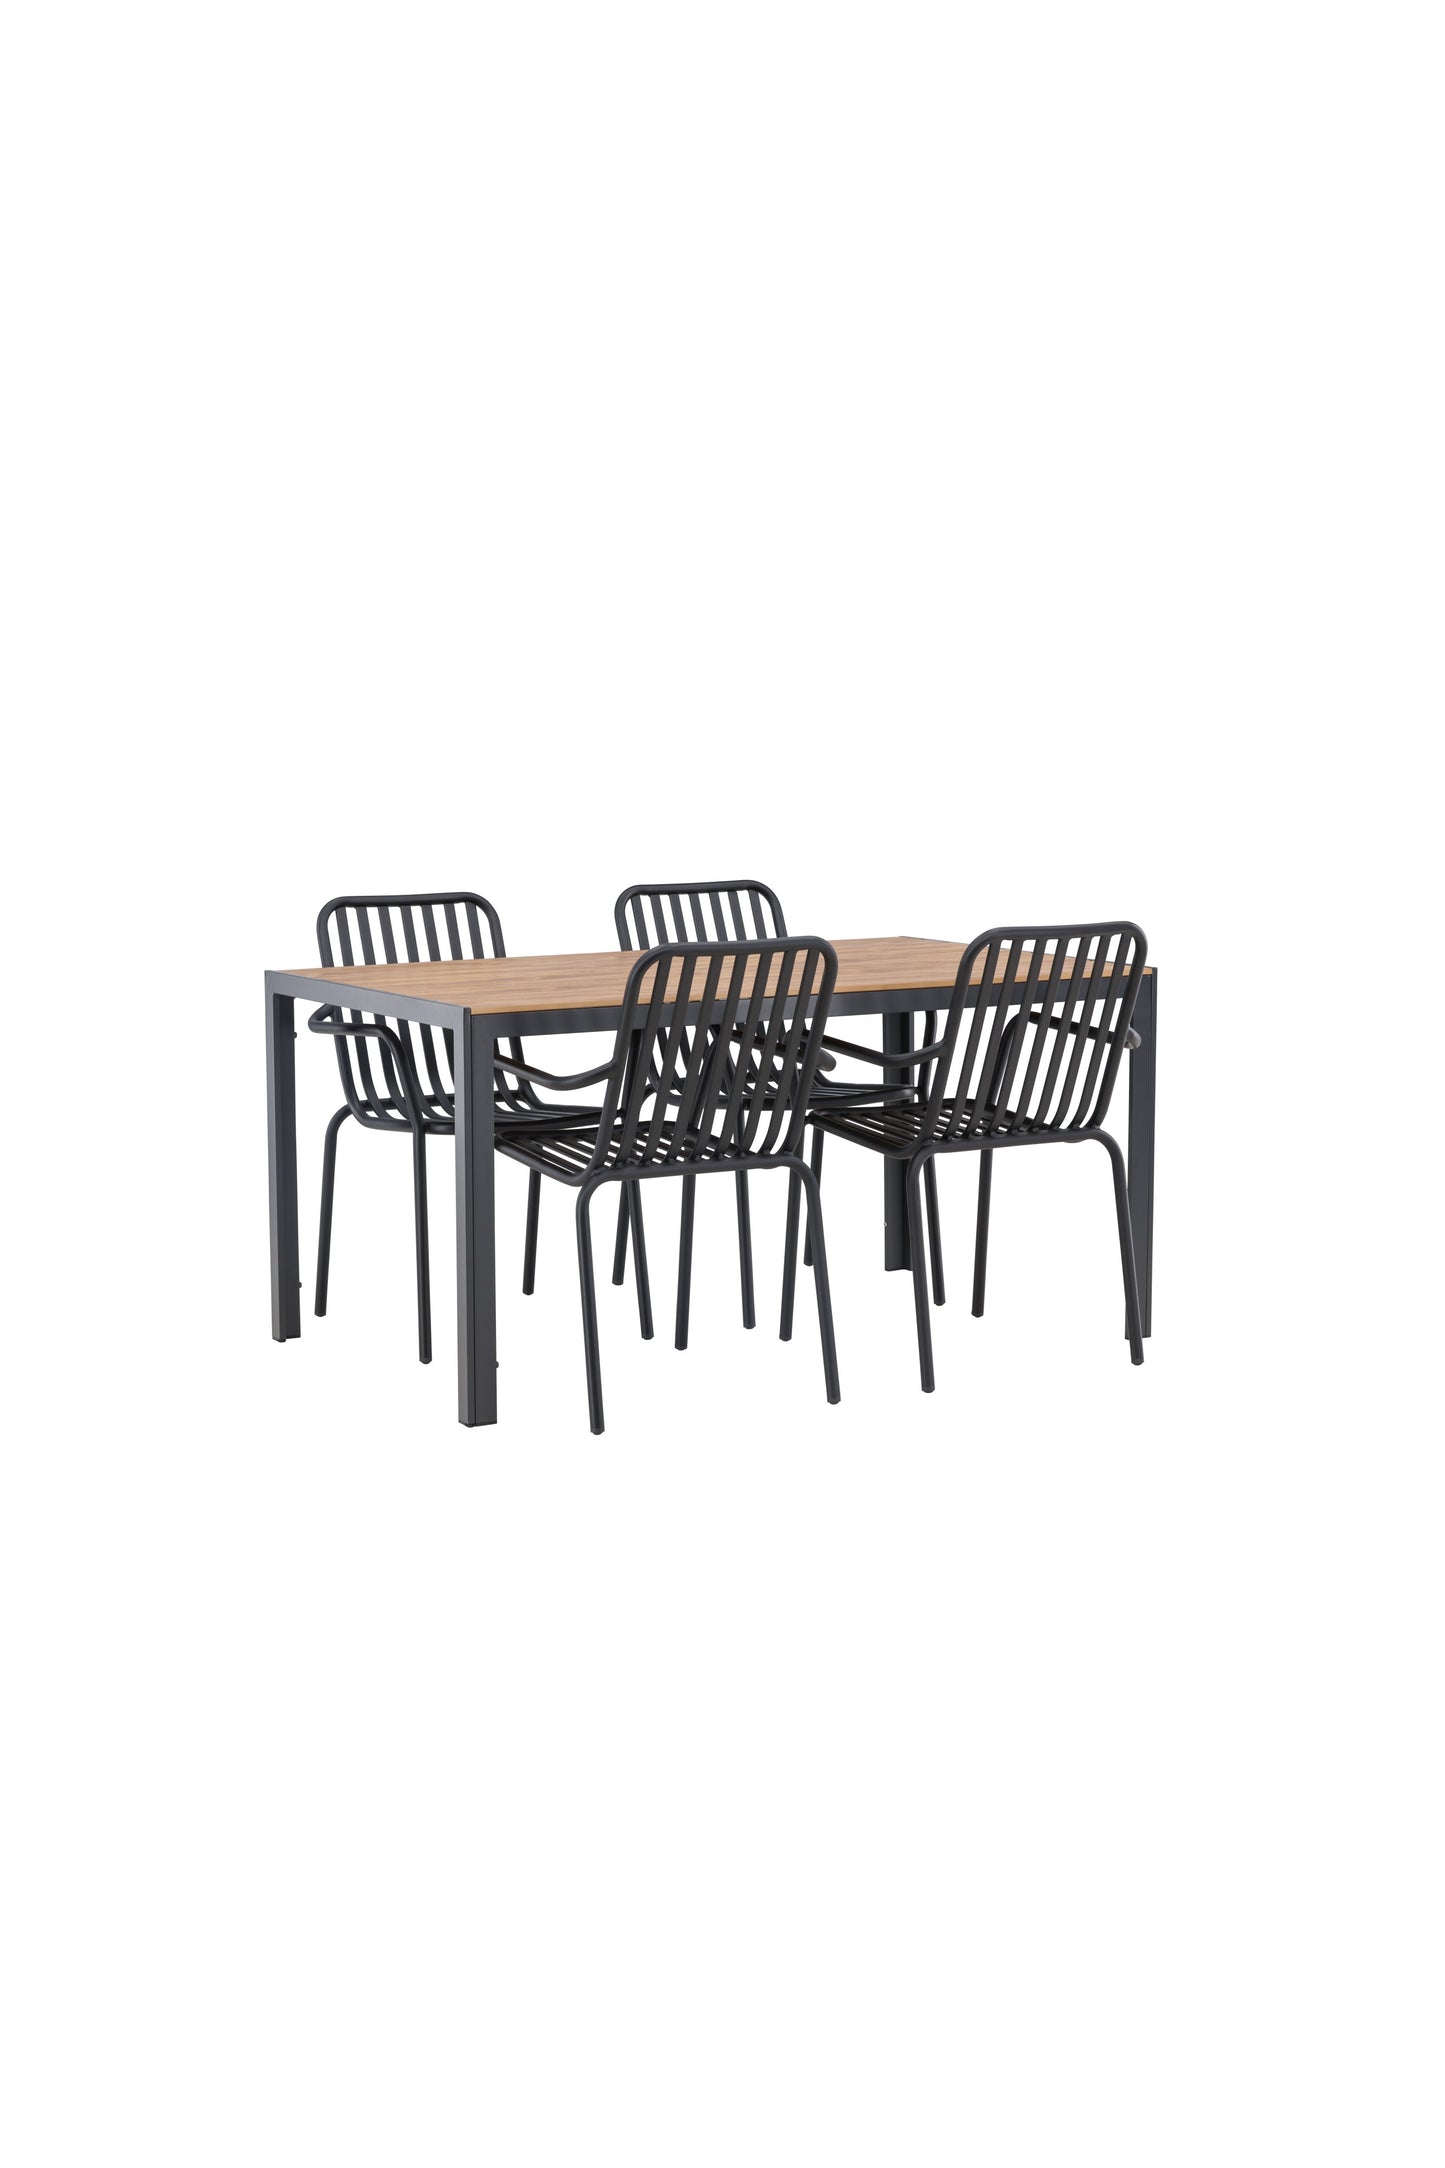 Break - Spisebord, Aluminium - Sort / Natur Rektangulær 90*150* + Pekig stol Aluminium - Sort